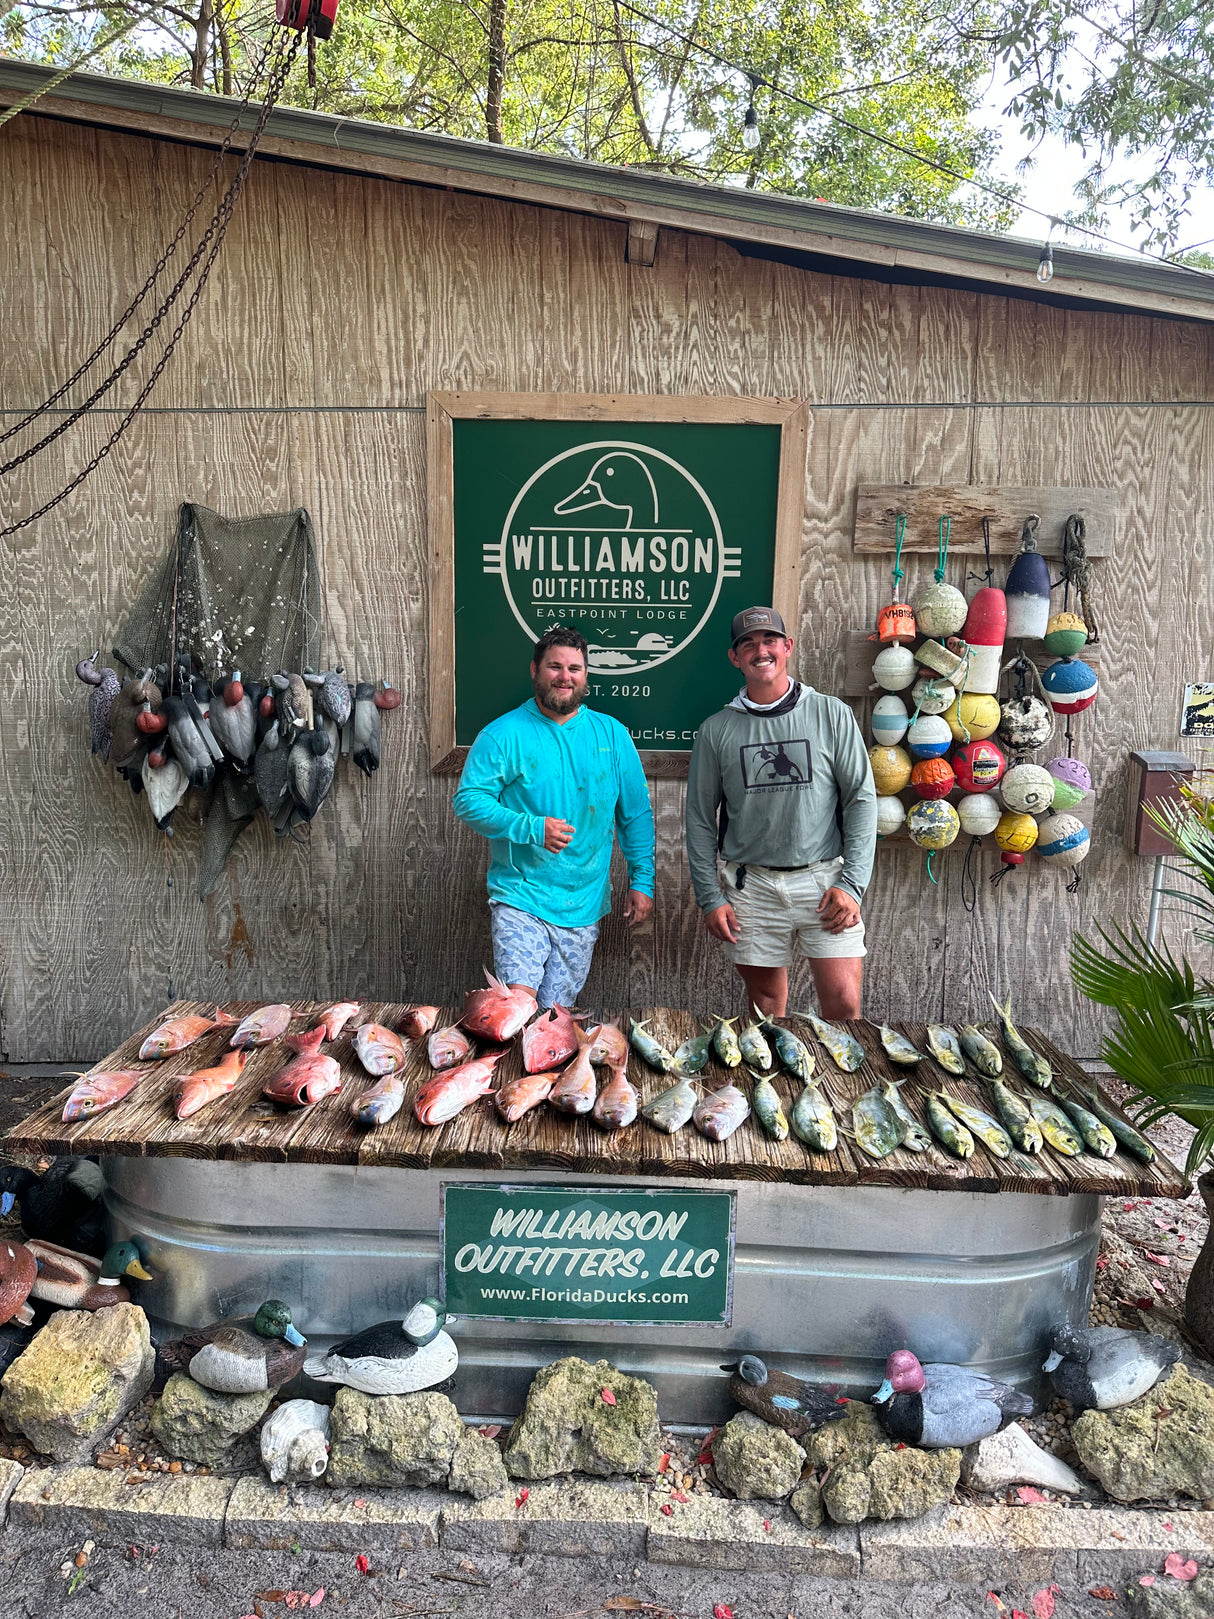 North Florida Mahi-Mahi Fishing: 6 Hr Trip $950, July and Aug. [30% BOOKING DEPOSIT]